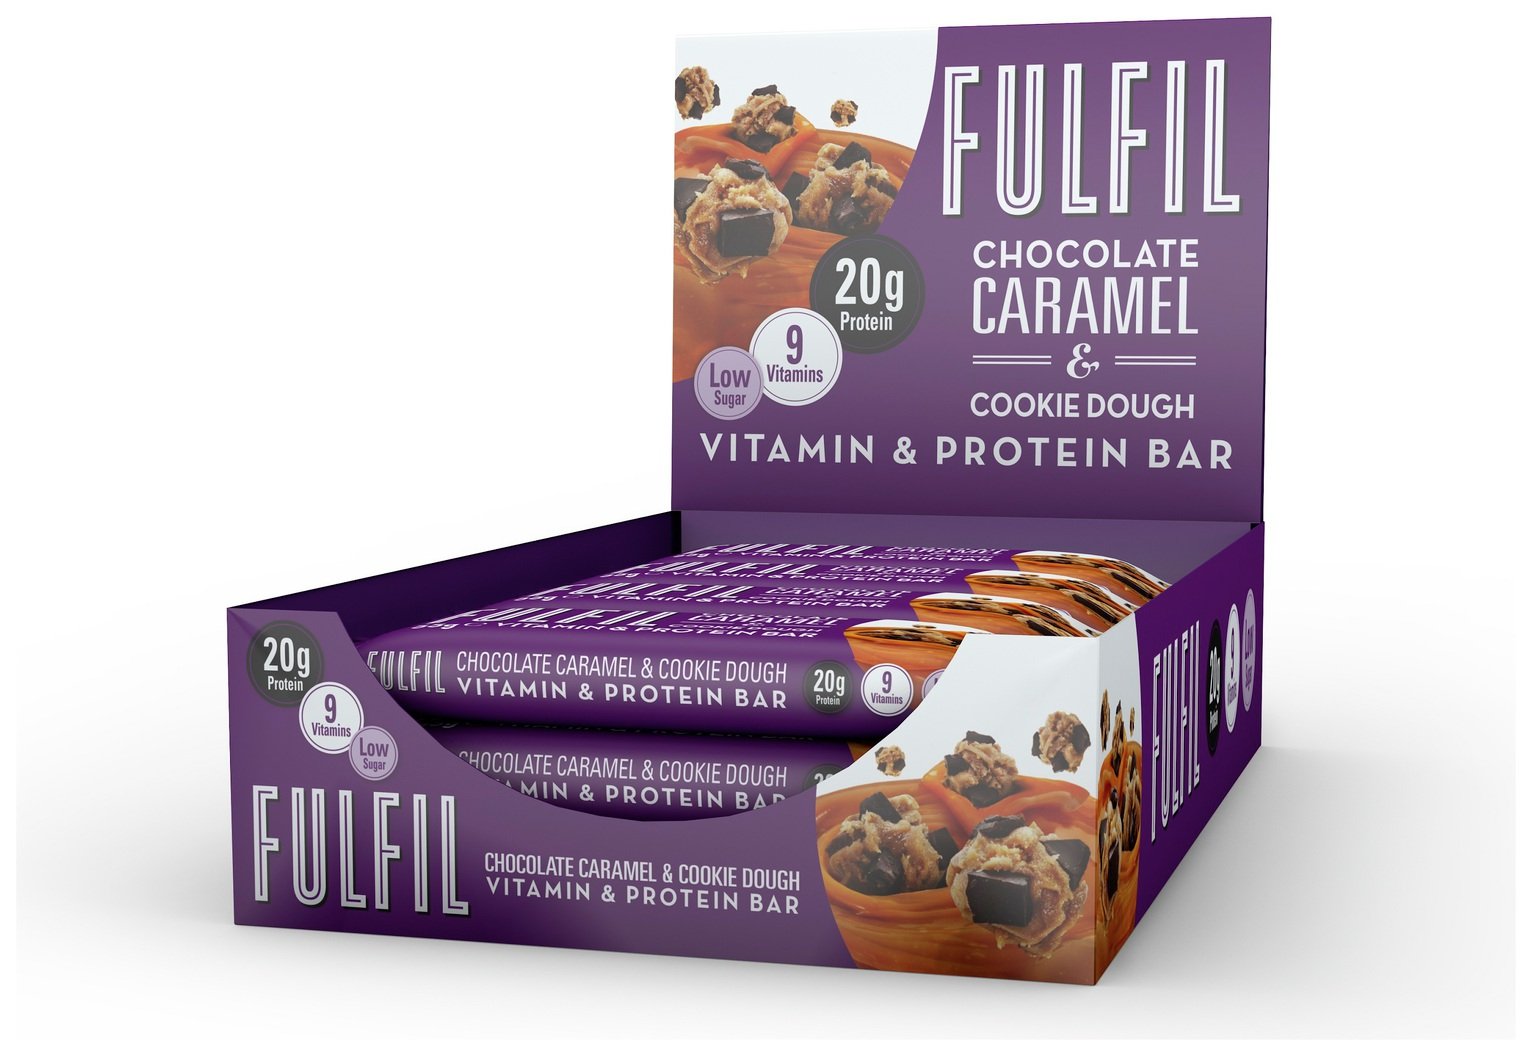 Fulfil Choc Caramel Cookie Dough Protein Vitamin Bars 15x55g review